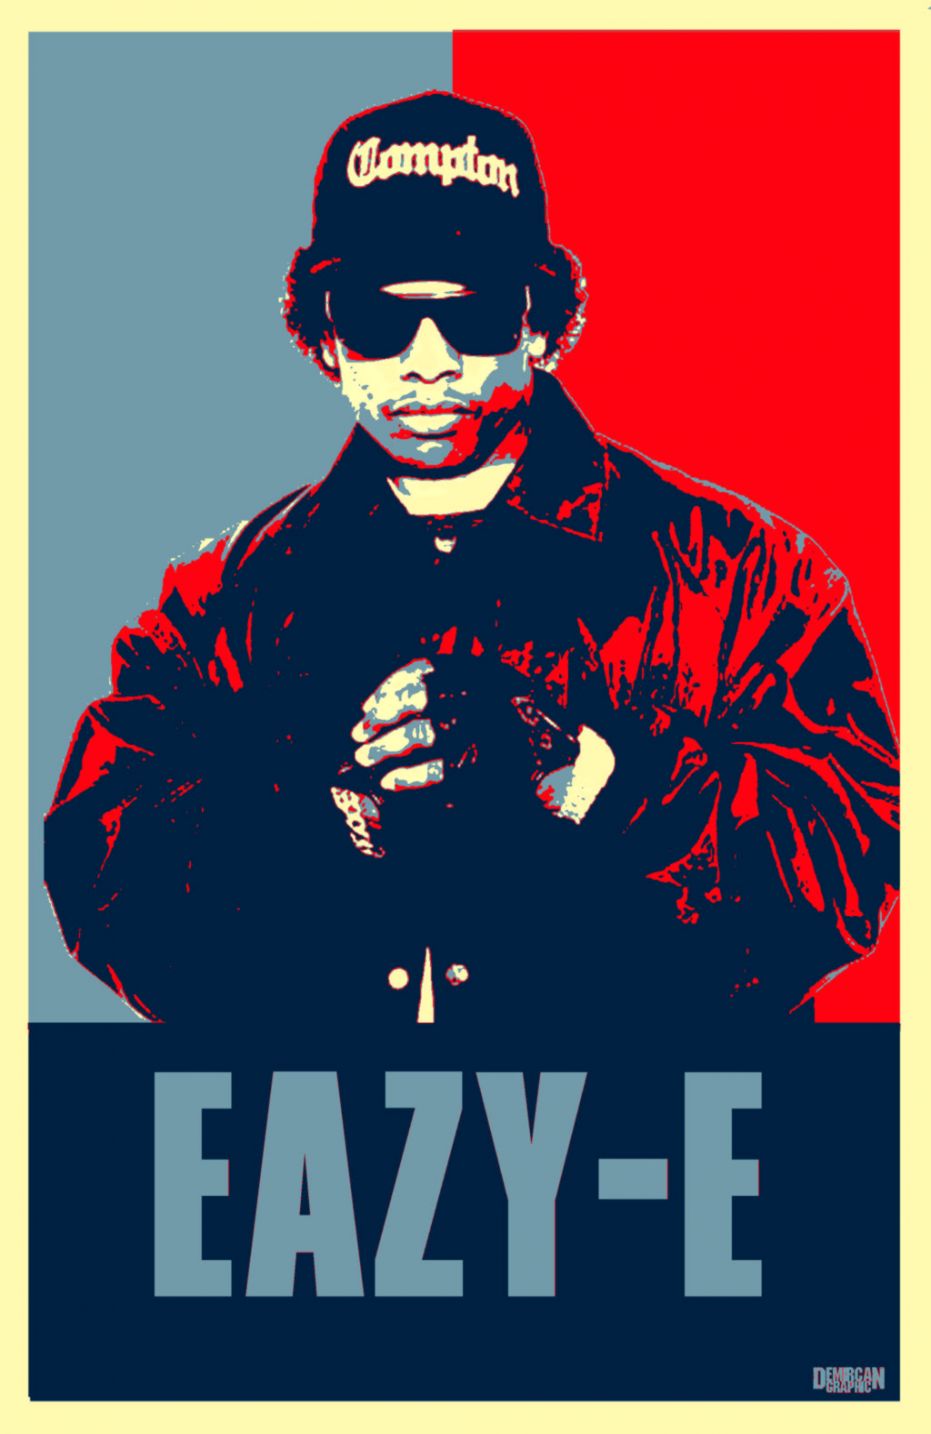 Eazy E Wallpapers